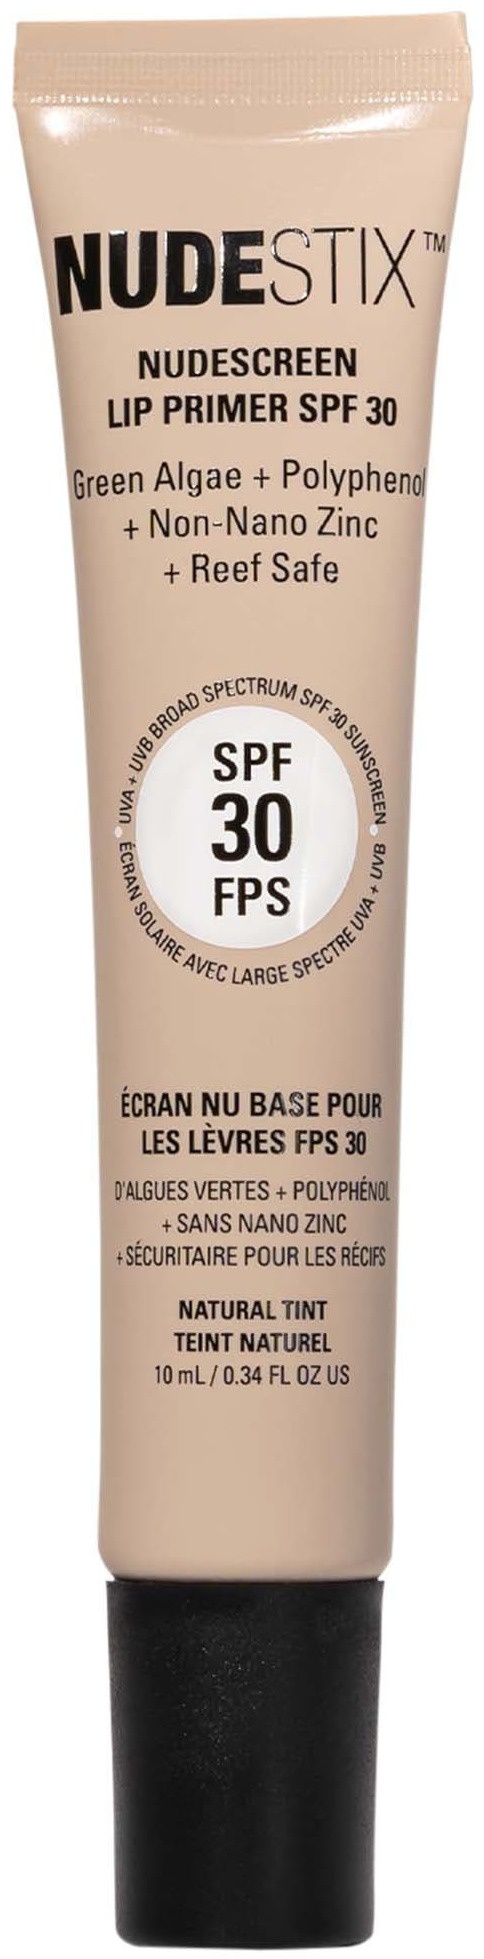 NudeStix Nudescreen Lip Primer SPF 30 Natural